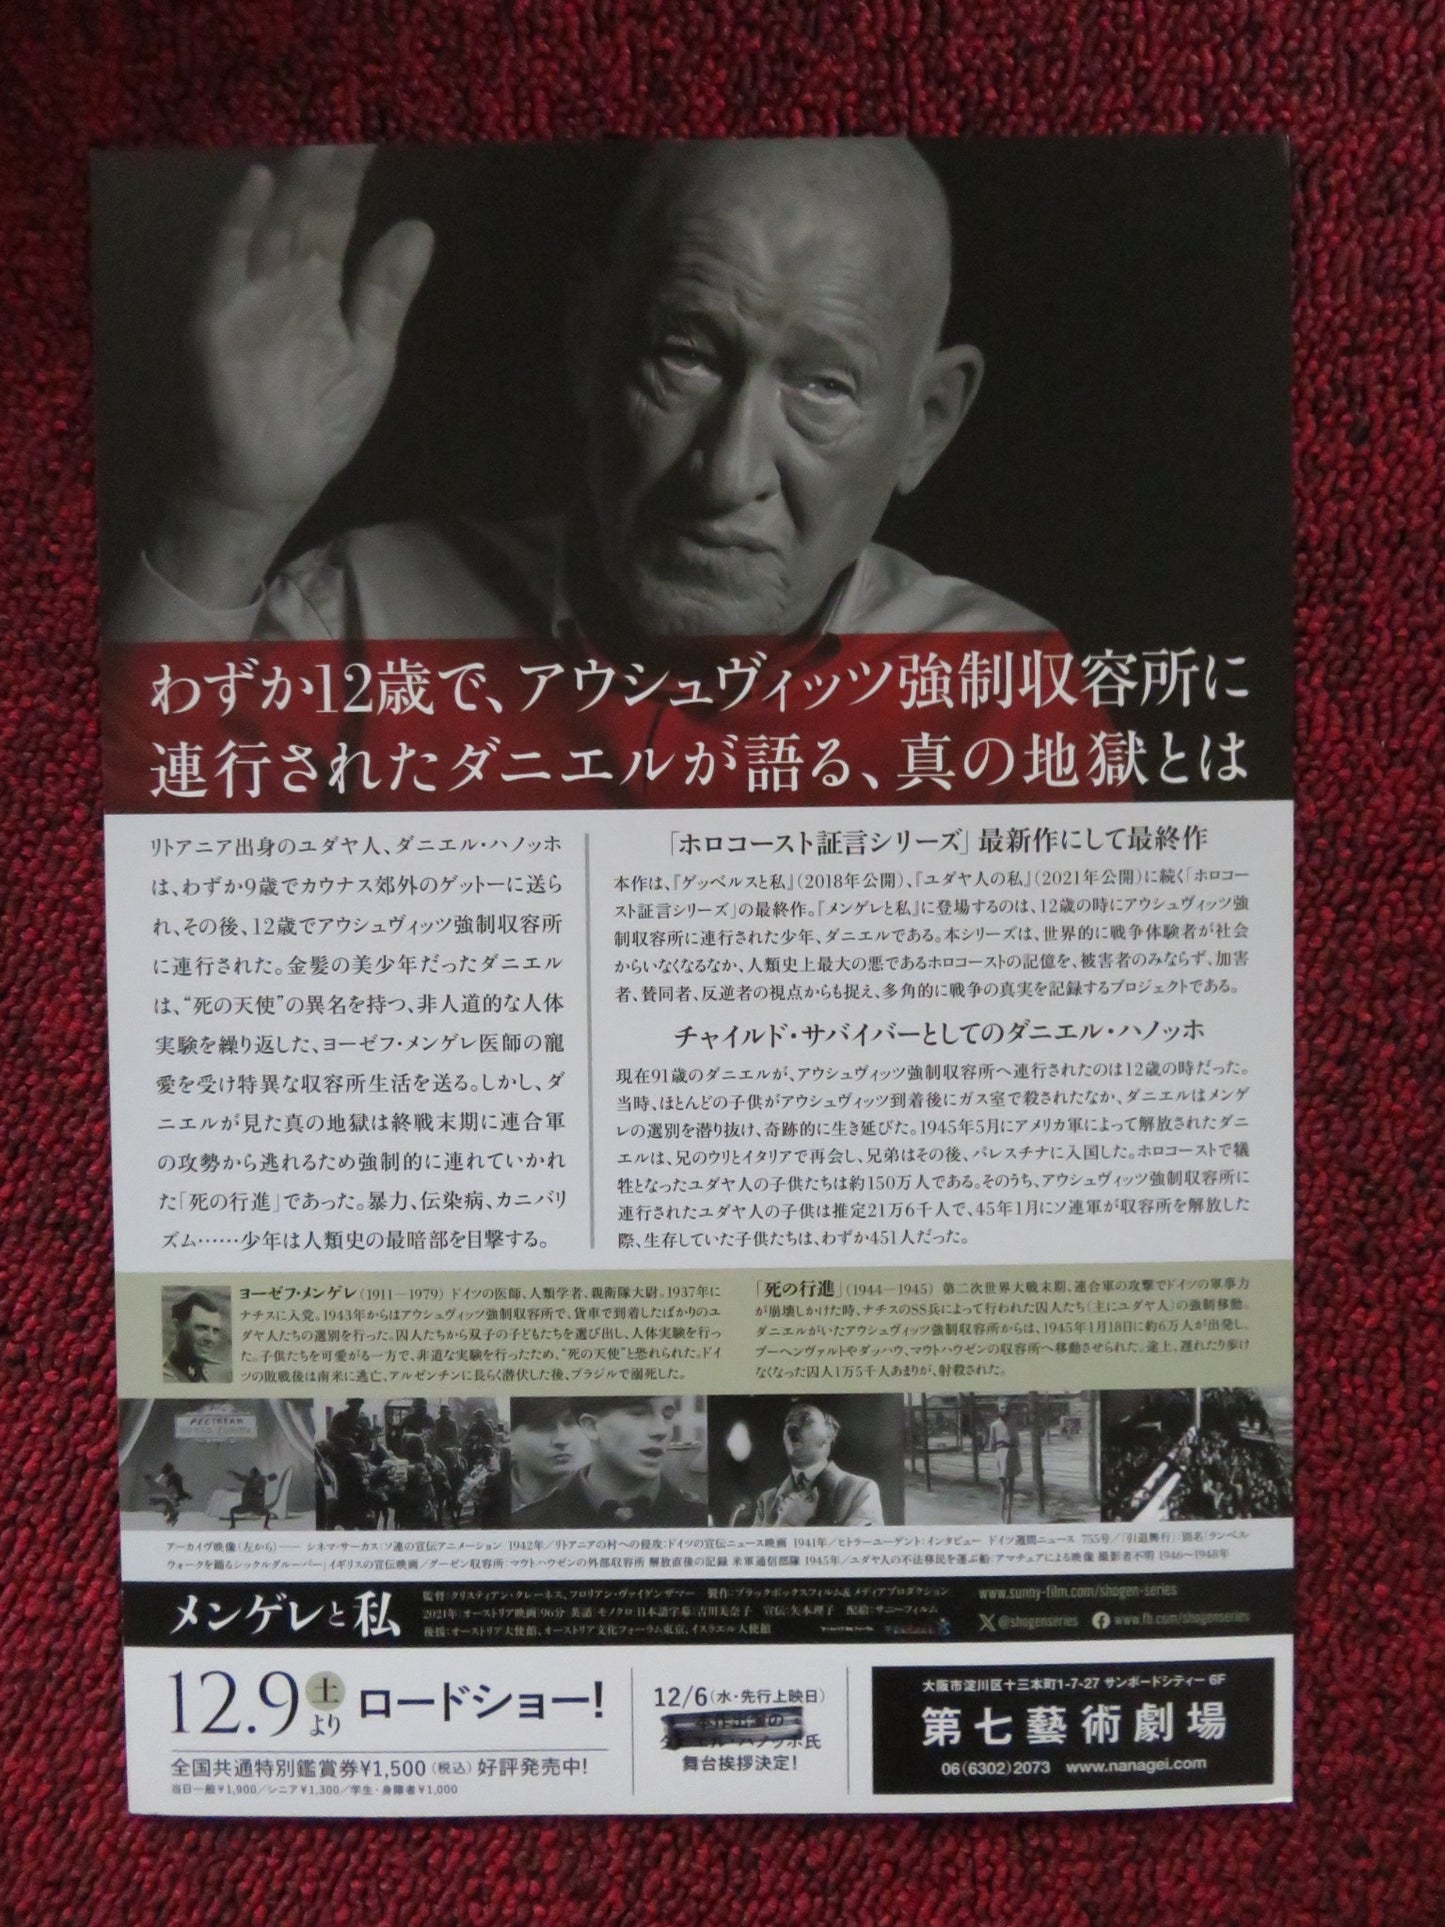 A BOY'S LIFE - KIND NUMMER B2826 JAPANESE CHIRASHI (B5) POSTER CHANOCH 2023